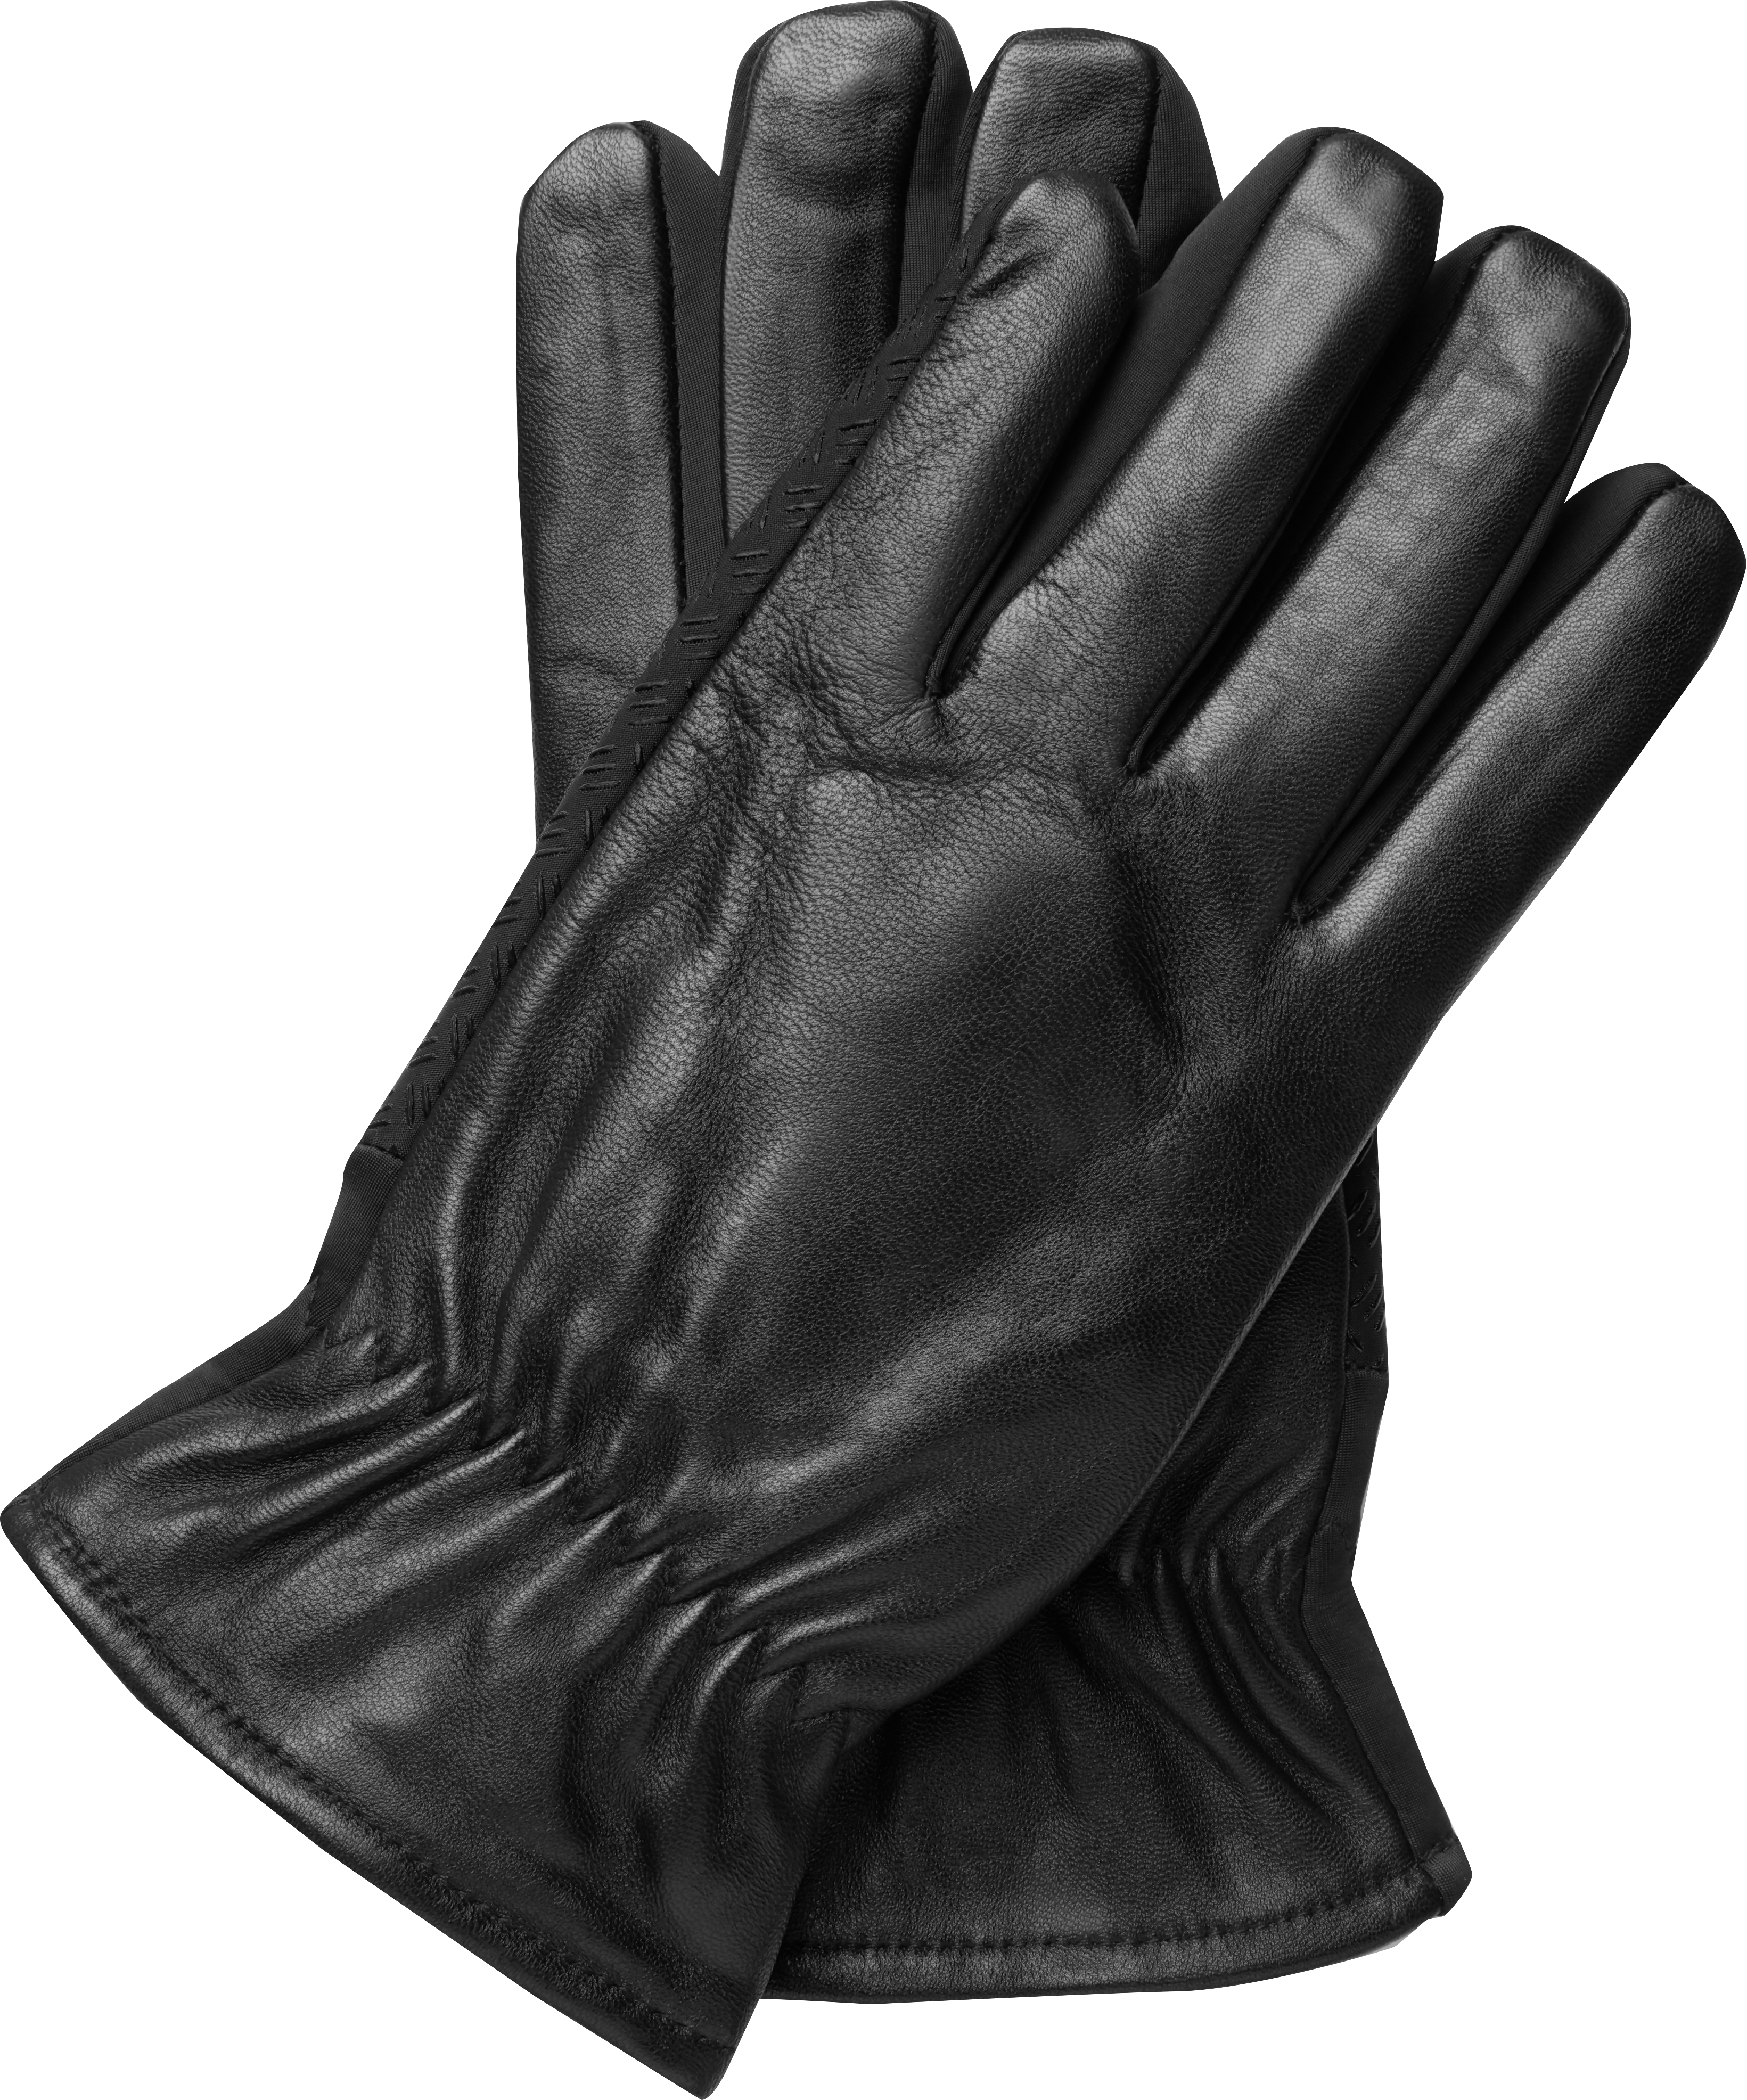 mens fine leather gloves